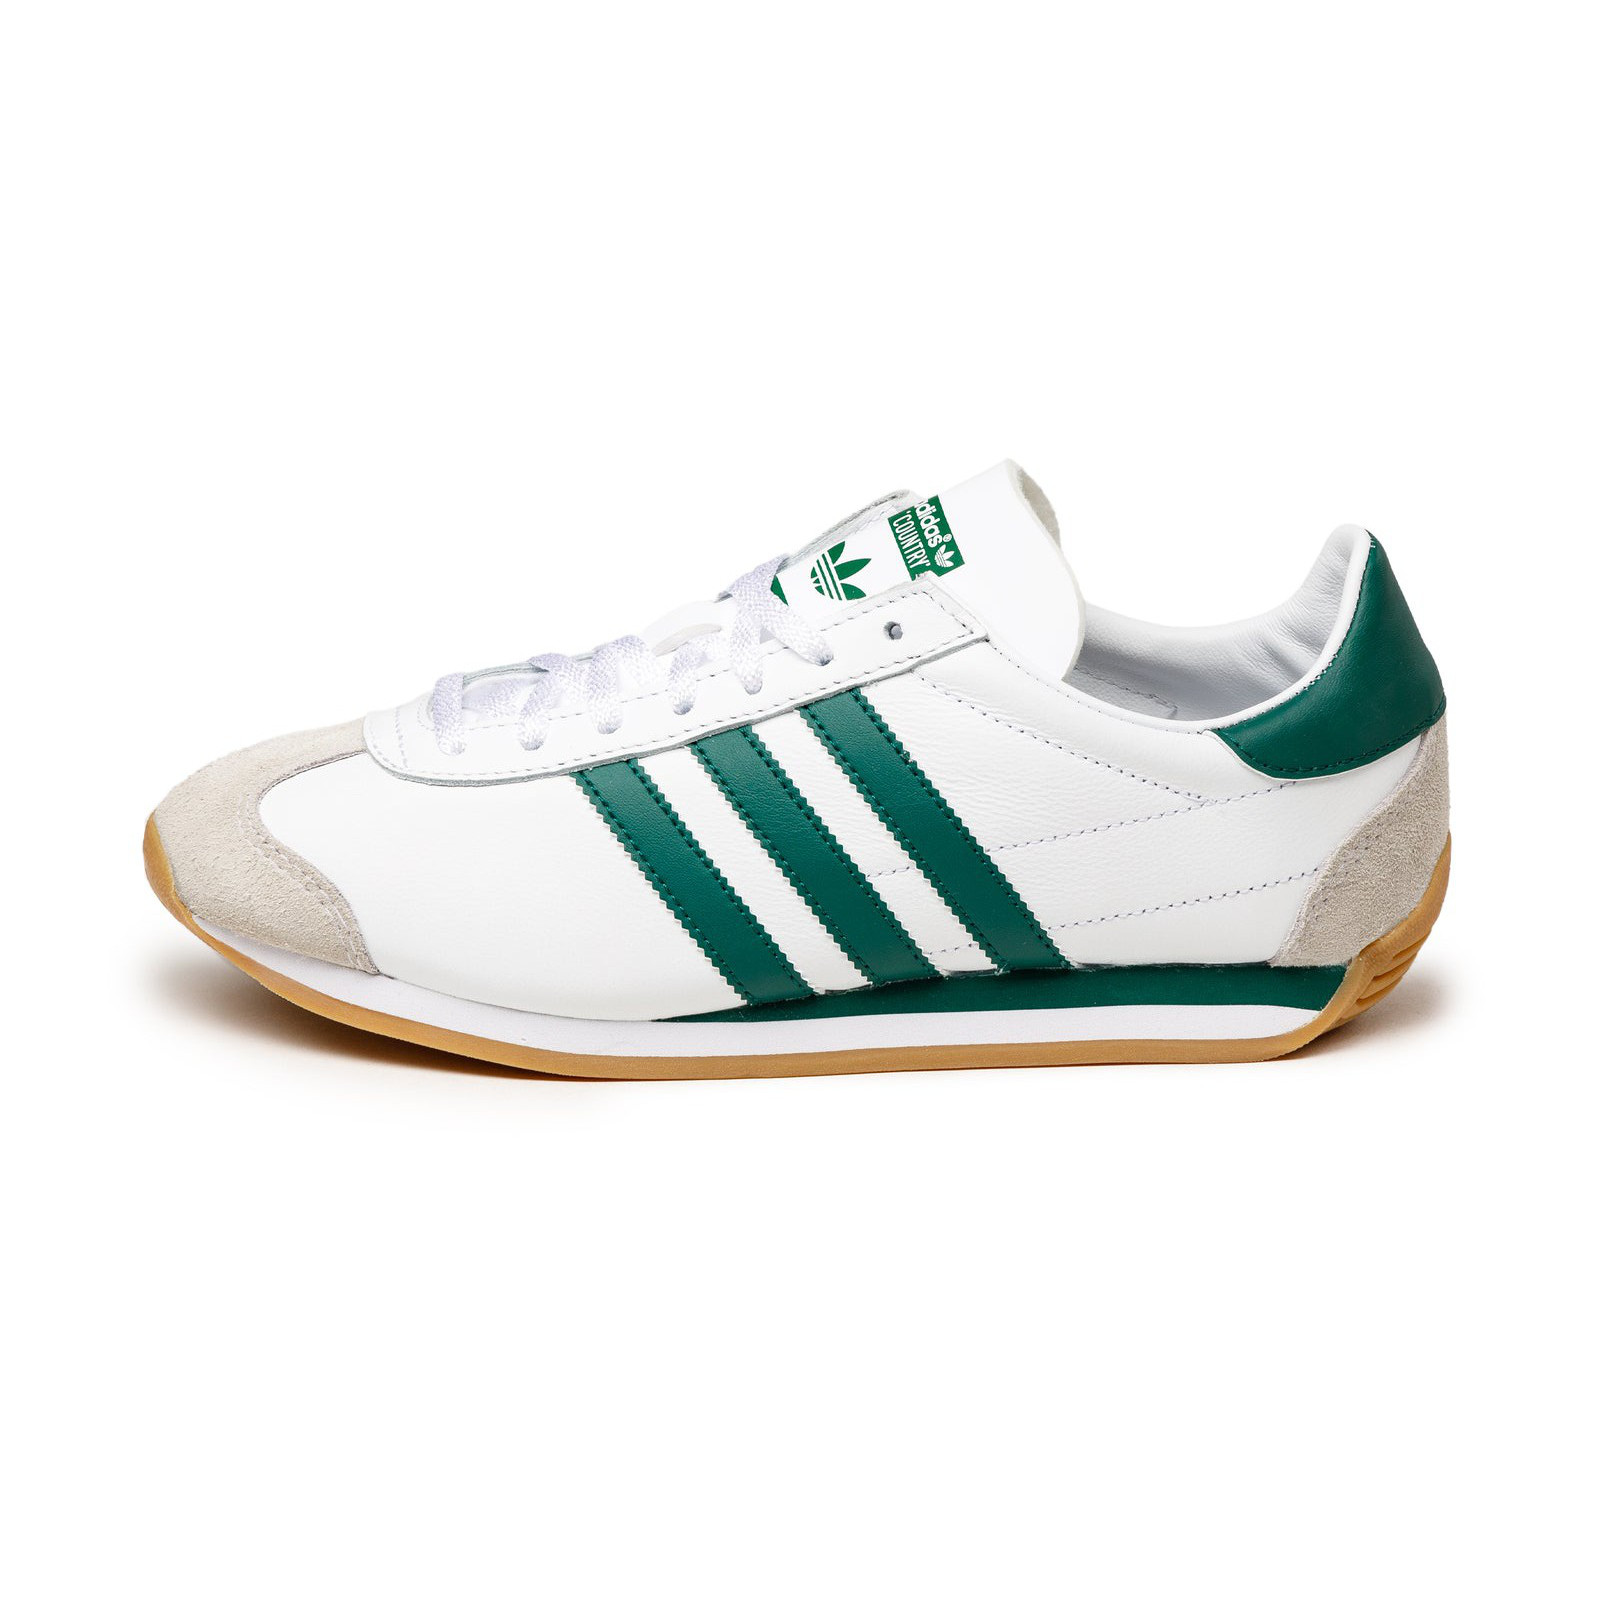 Adidas Country OG
Footwear White / Collegiate Green